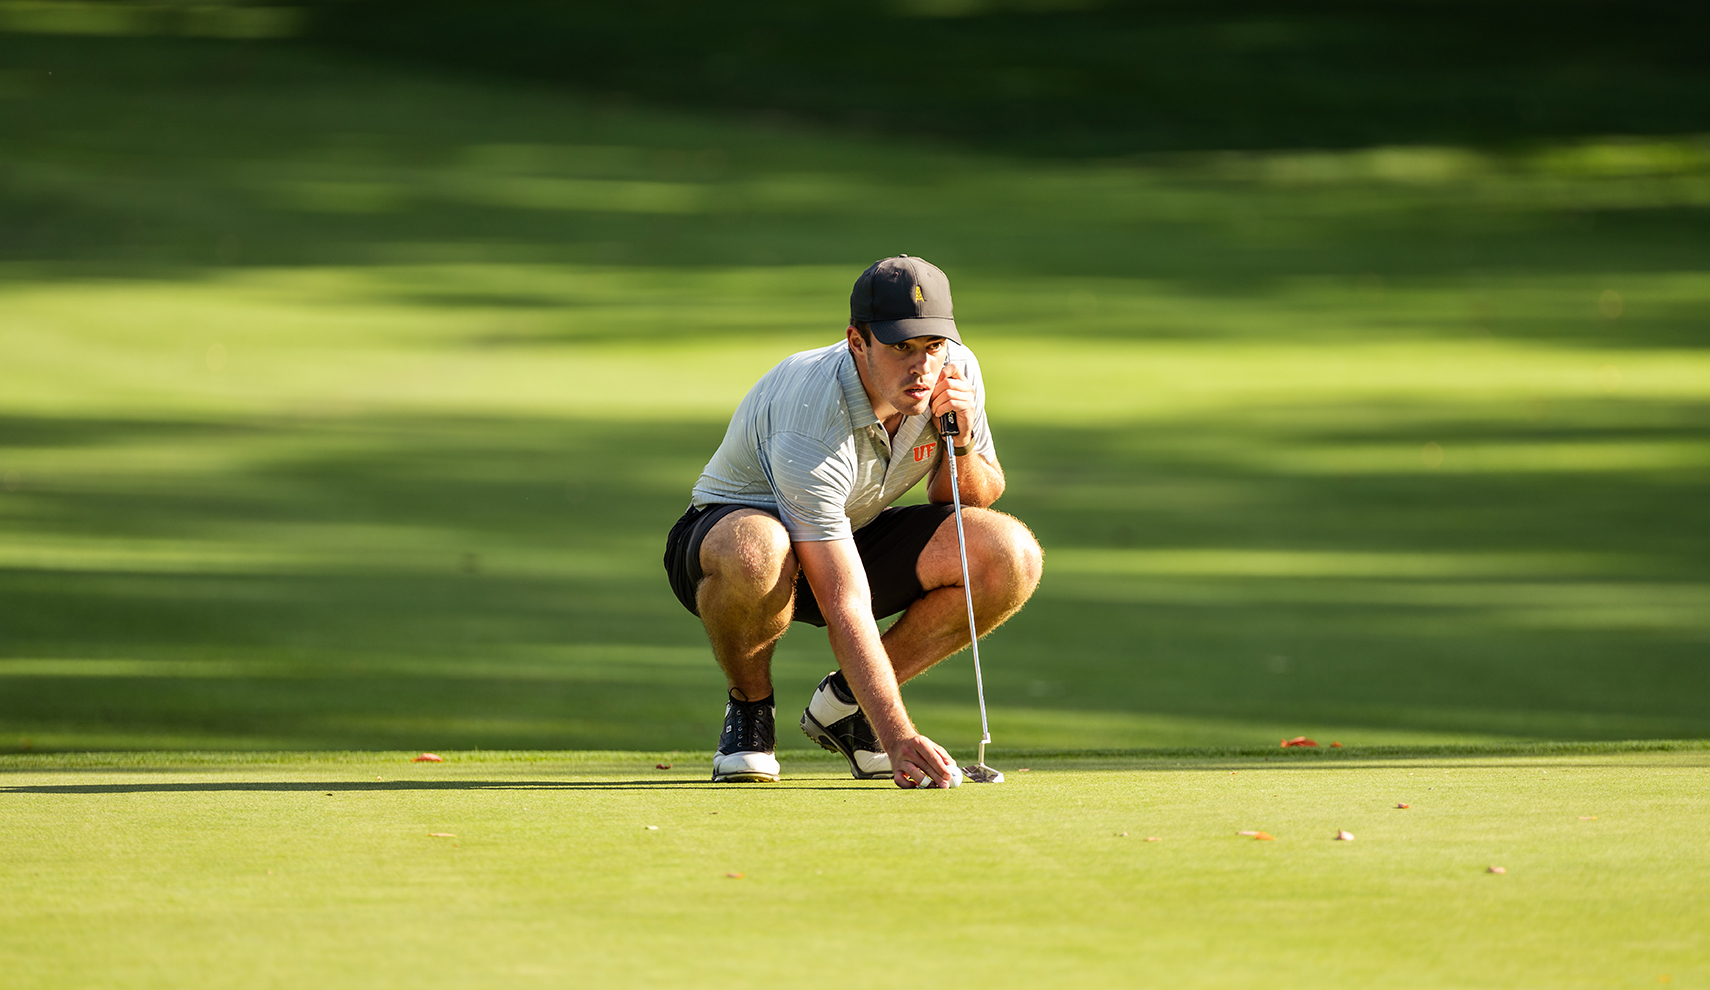 Male golfer eyeing up a putt